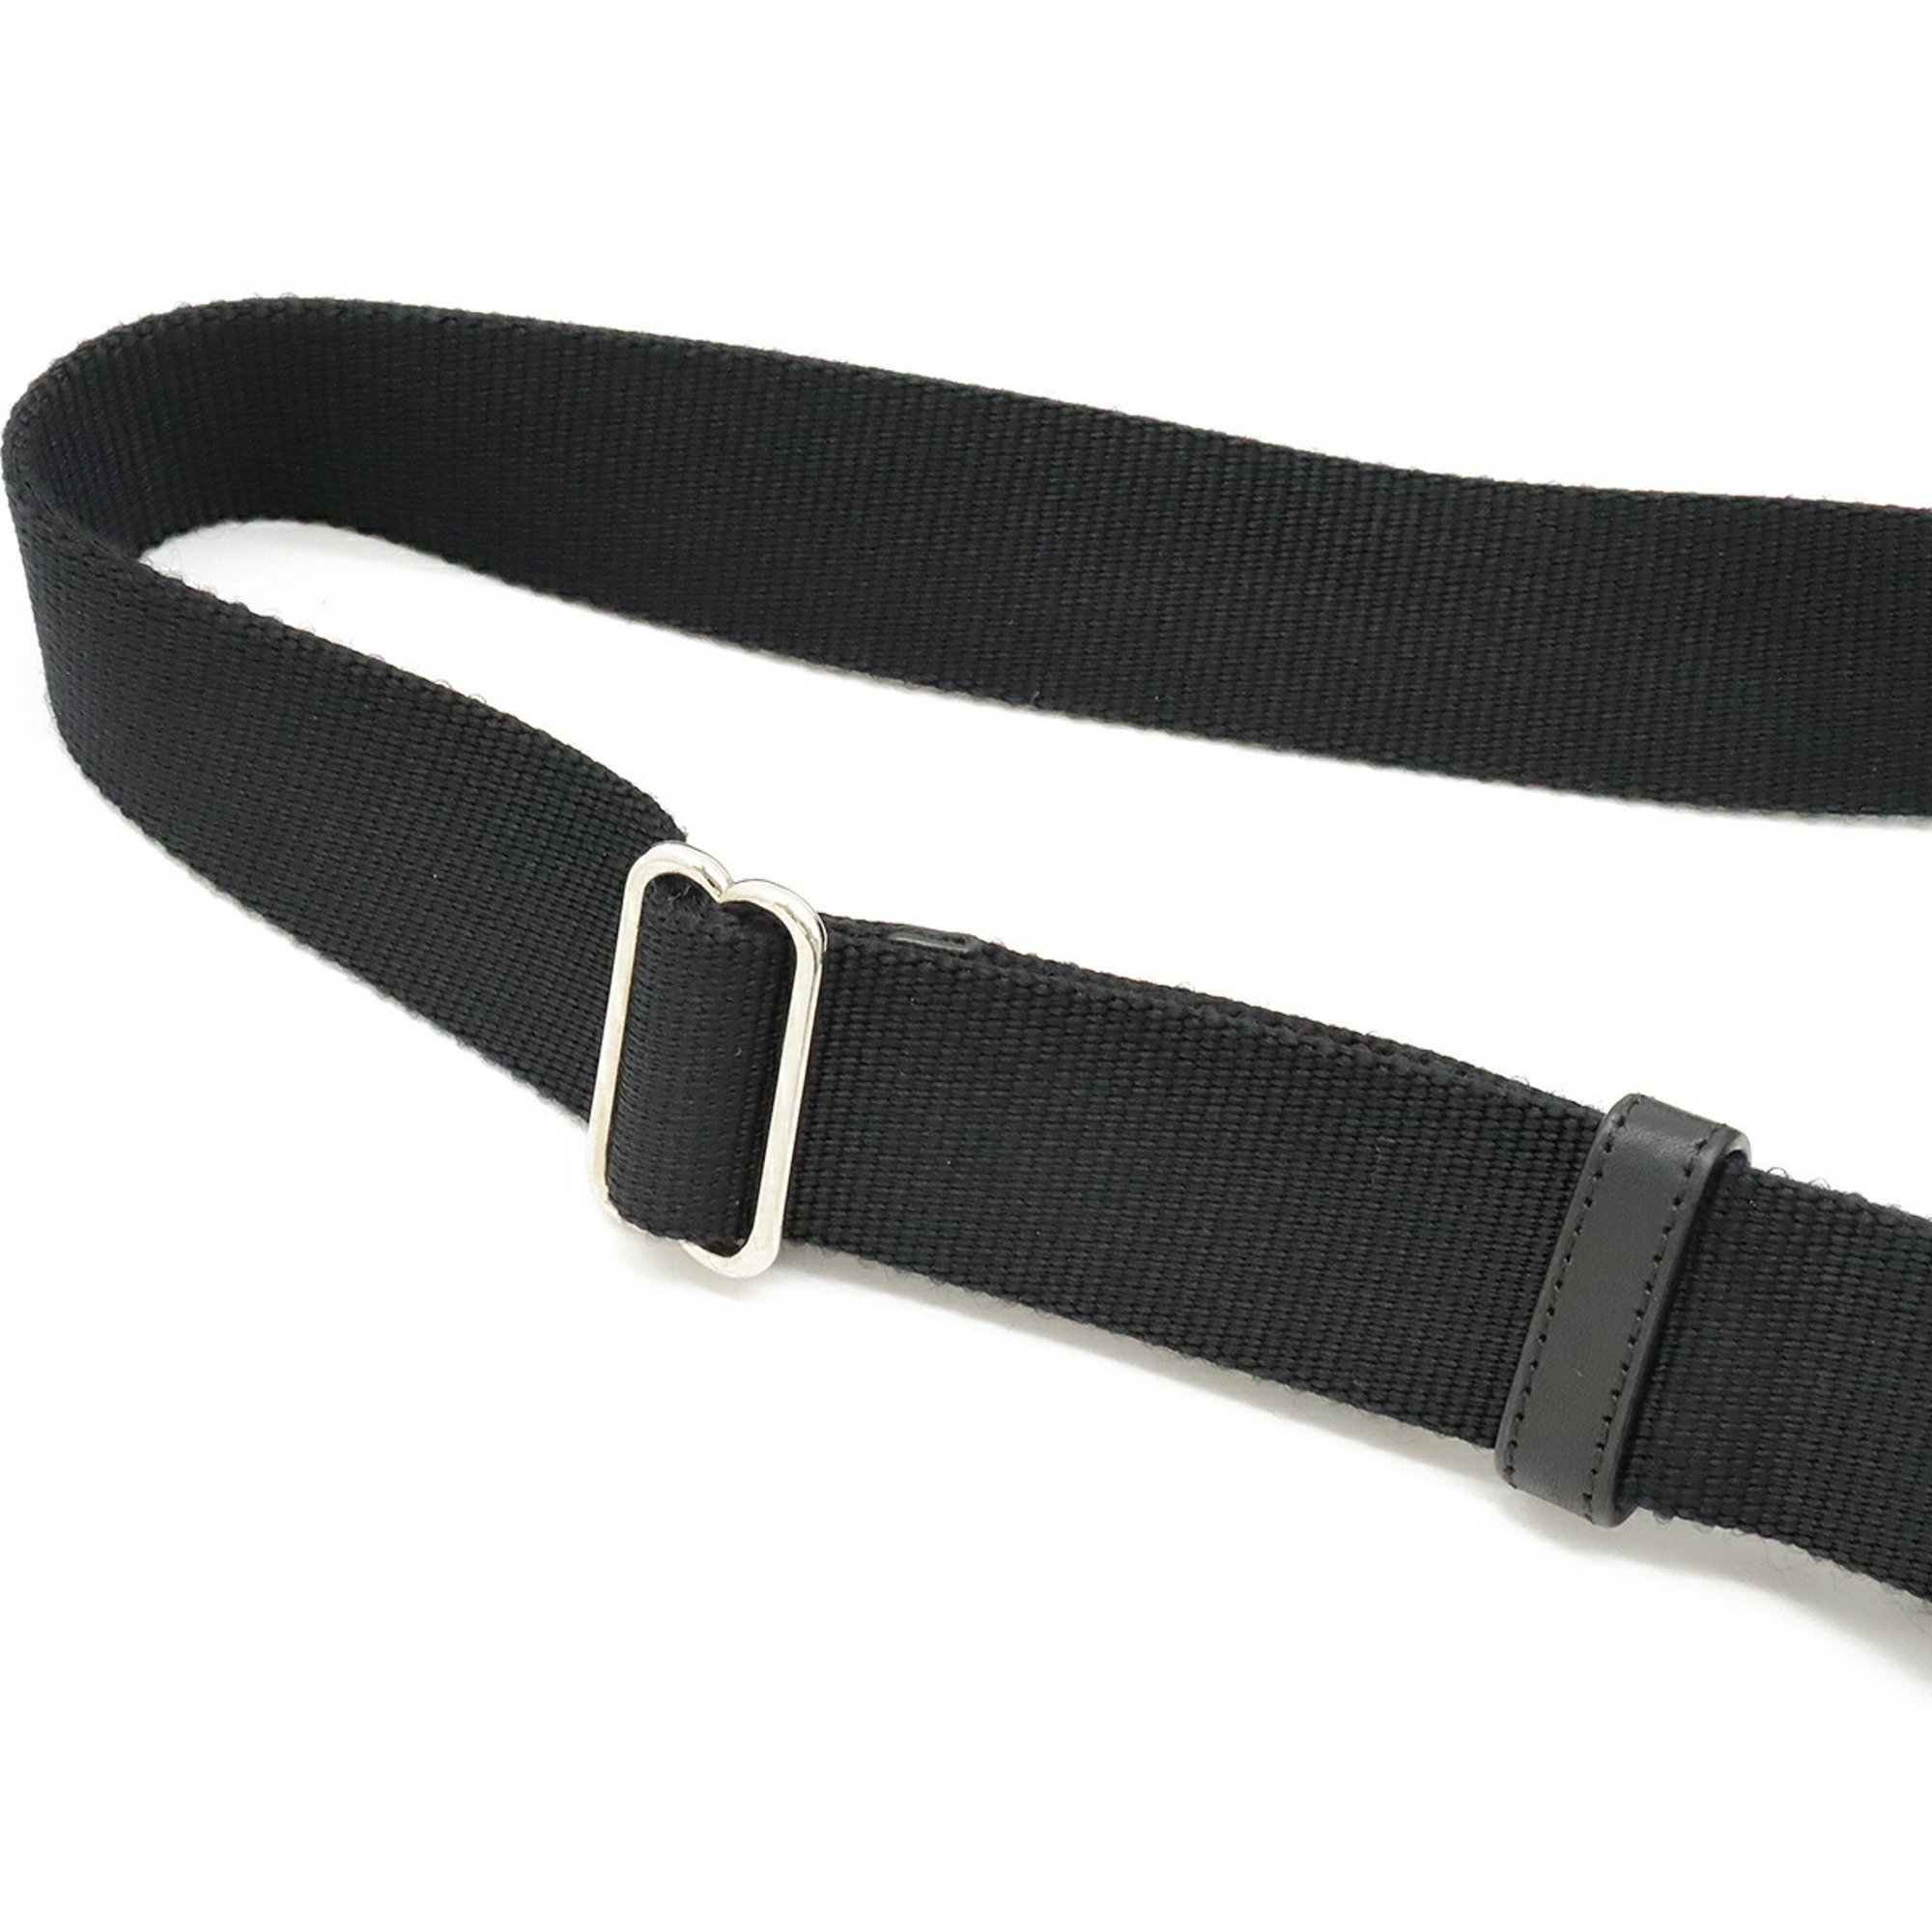 BURBERRY Checked shoulder bag PVC Leather Grey Black 8013987